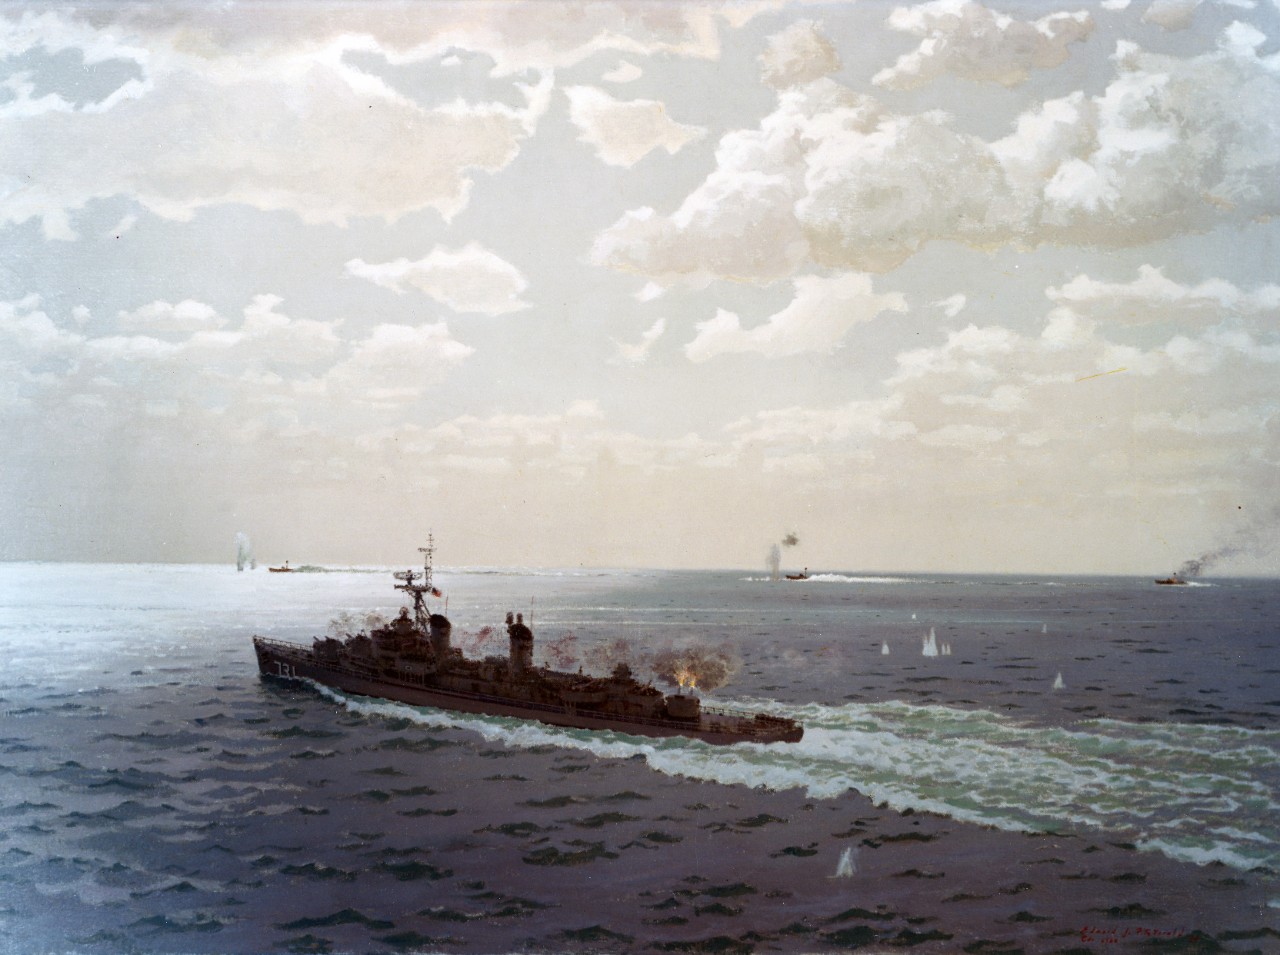 Tonkin Gulf Incident, August 1964